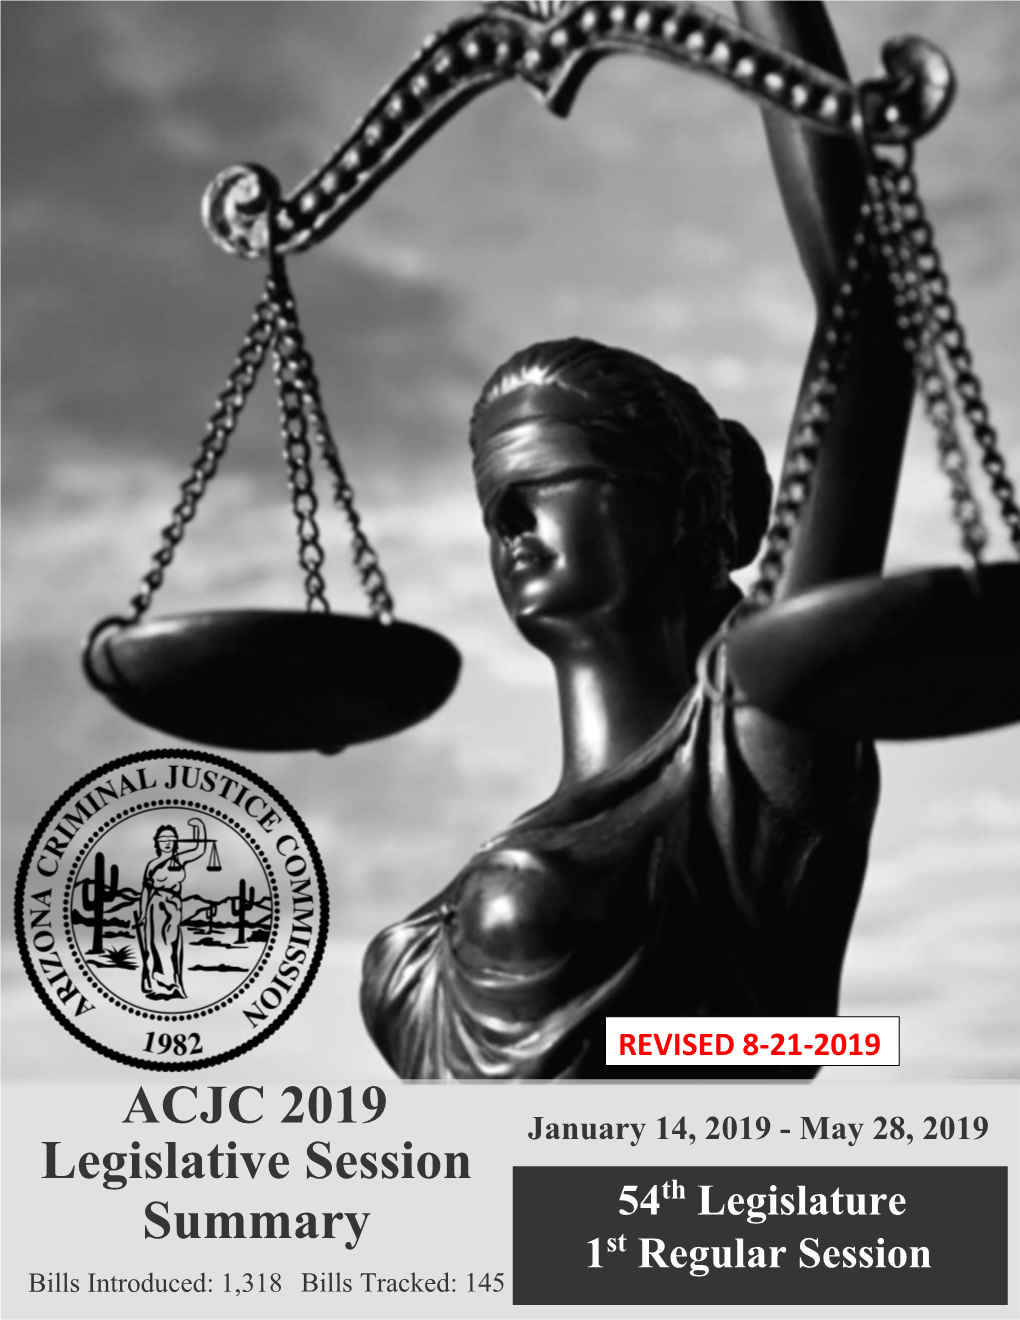 ACJC 2019 Legislative Session Summary